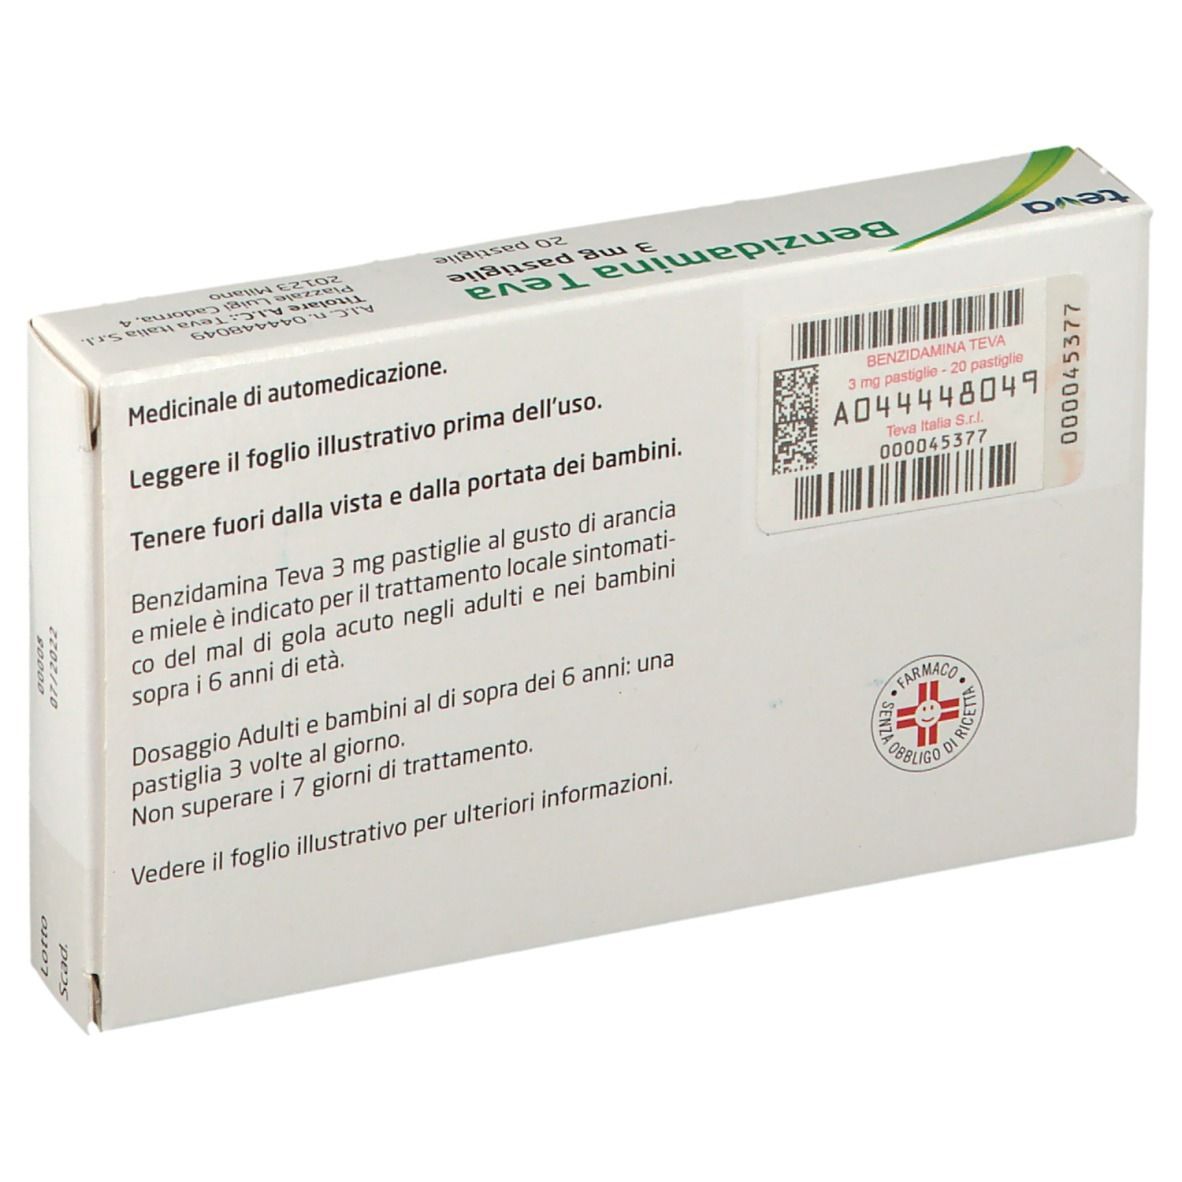 Benzidamina Teva 3 mg pastiglie Benzidamina cloridrato